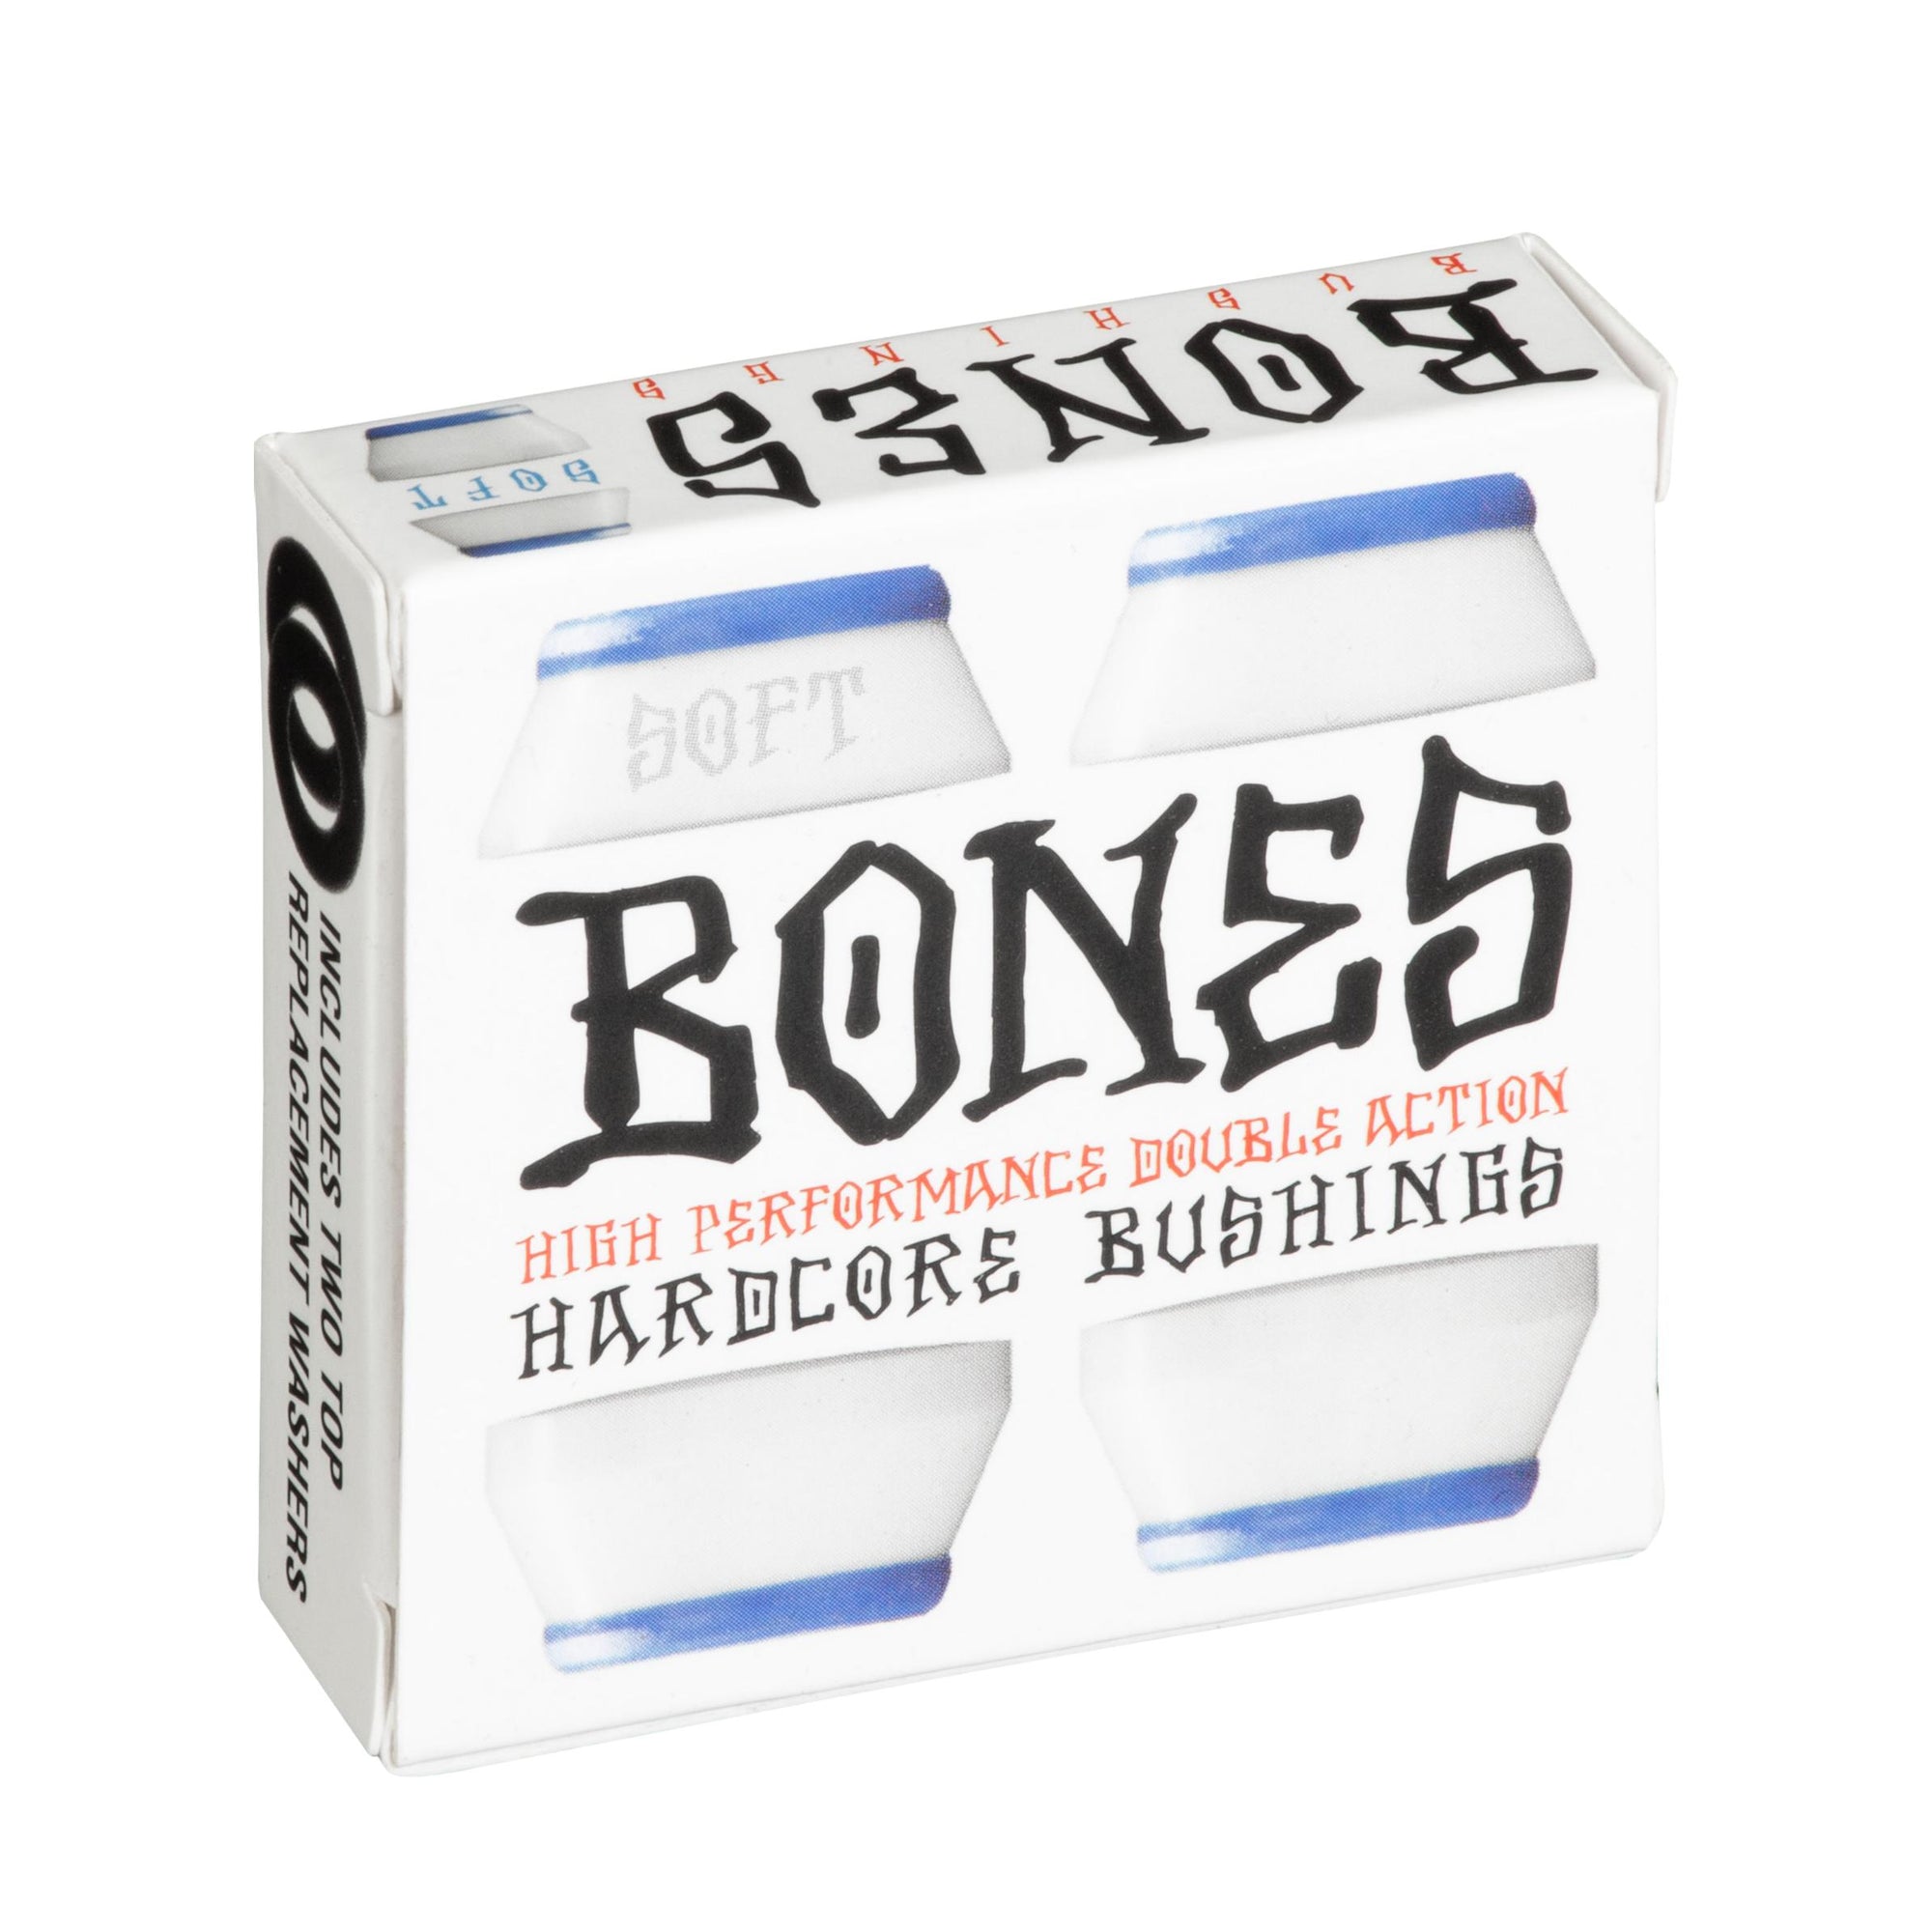 Bones Hardcore Bushings - Soft White - Venue Skateboards